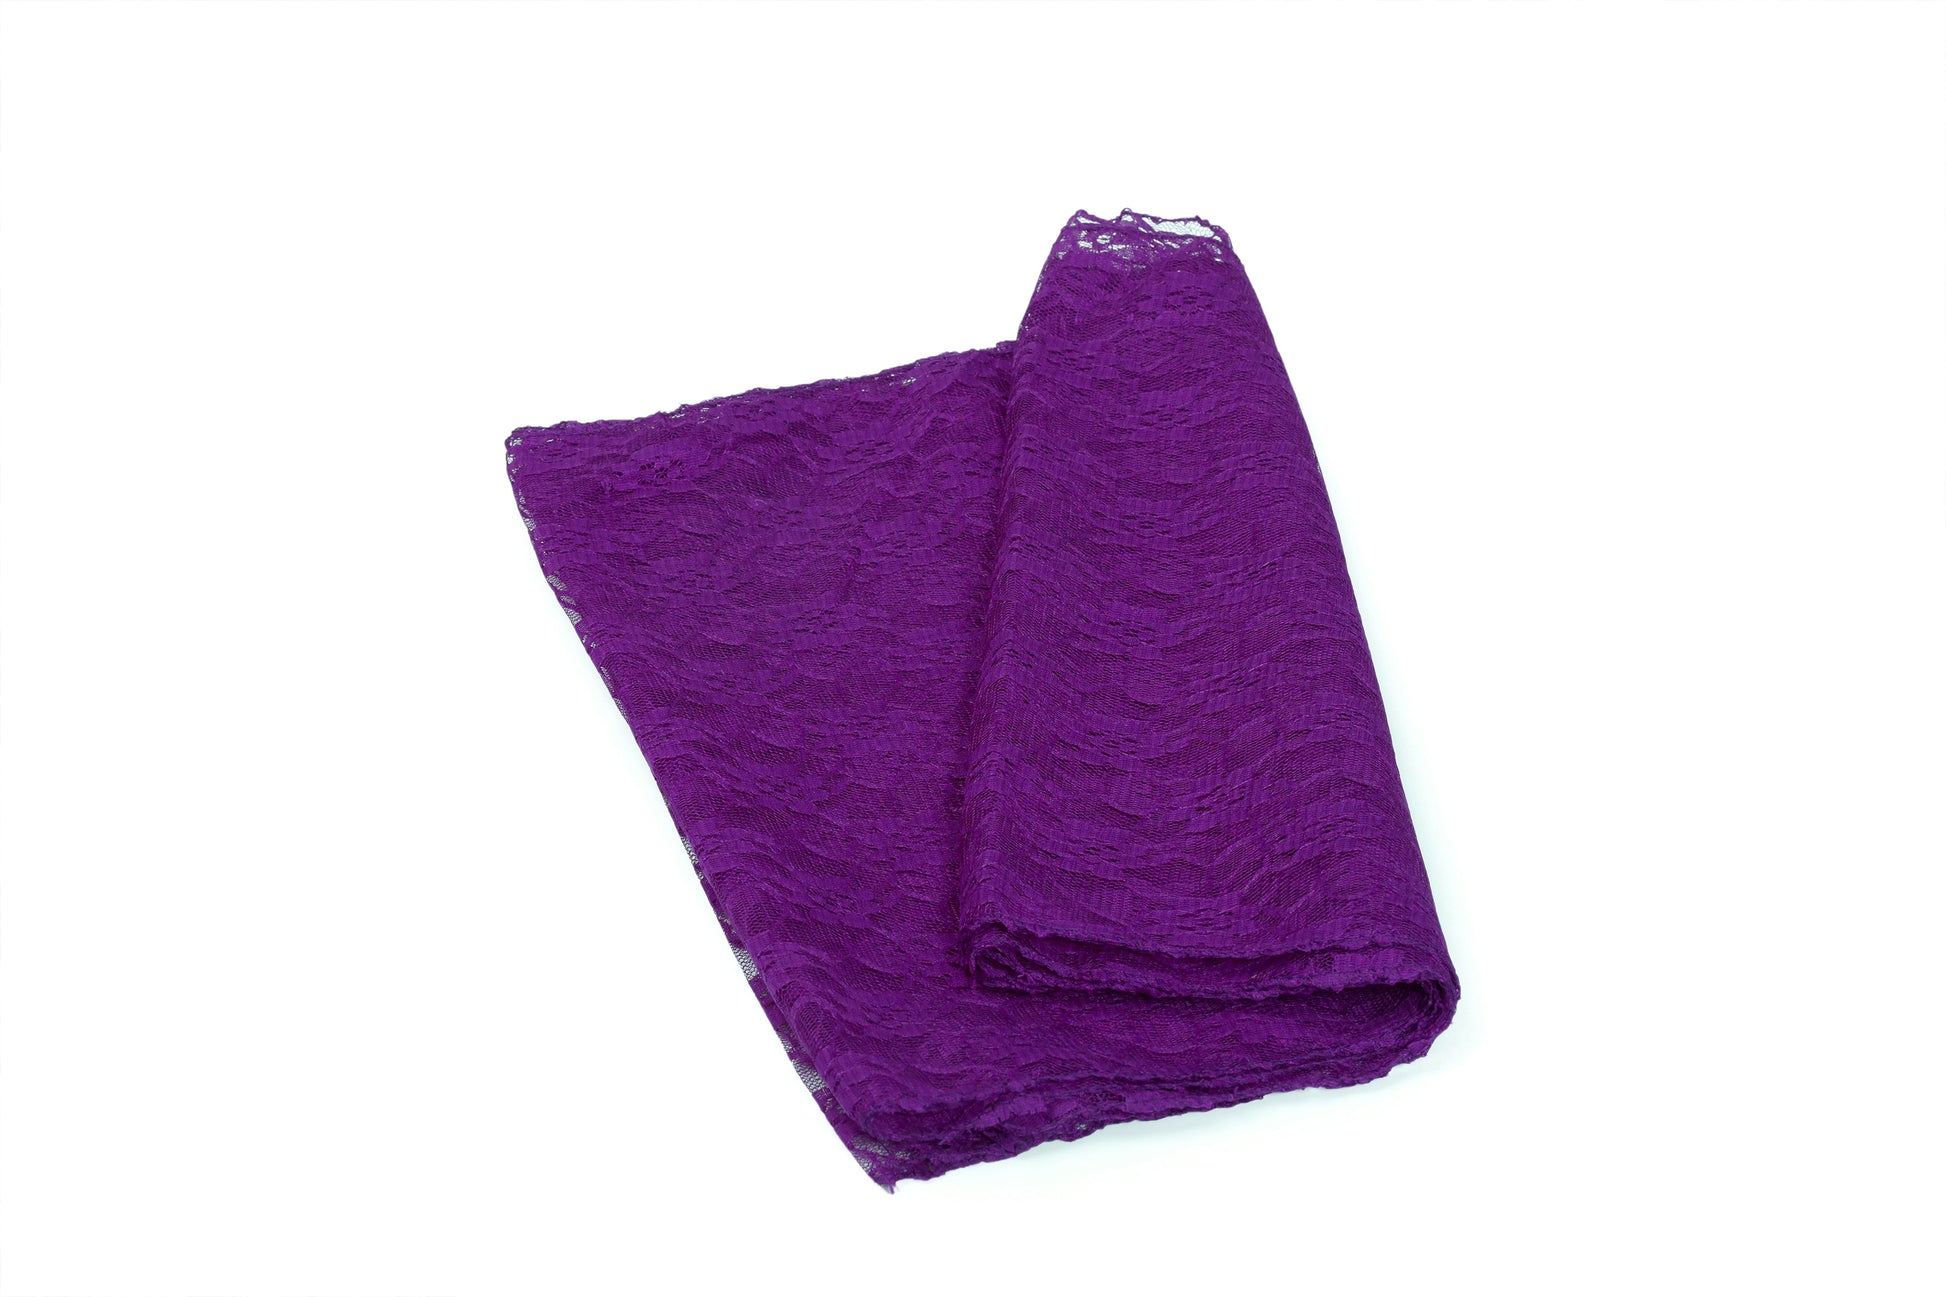 Cadbury Purple,3baaac45-a1c9-451c-85d1-383f4e0417e2